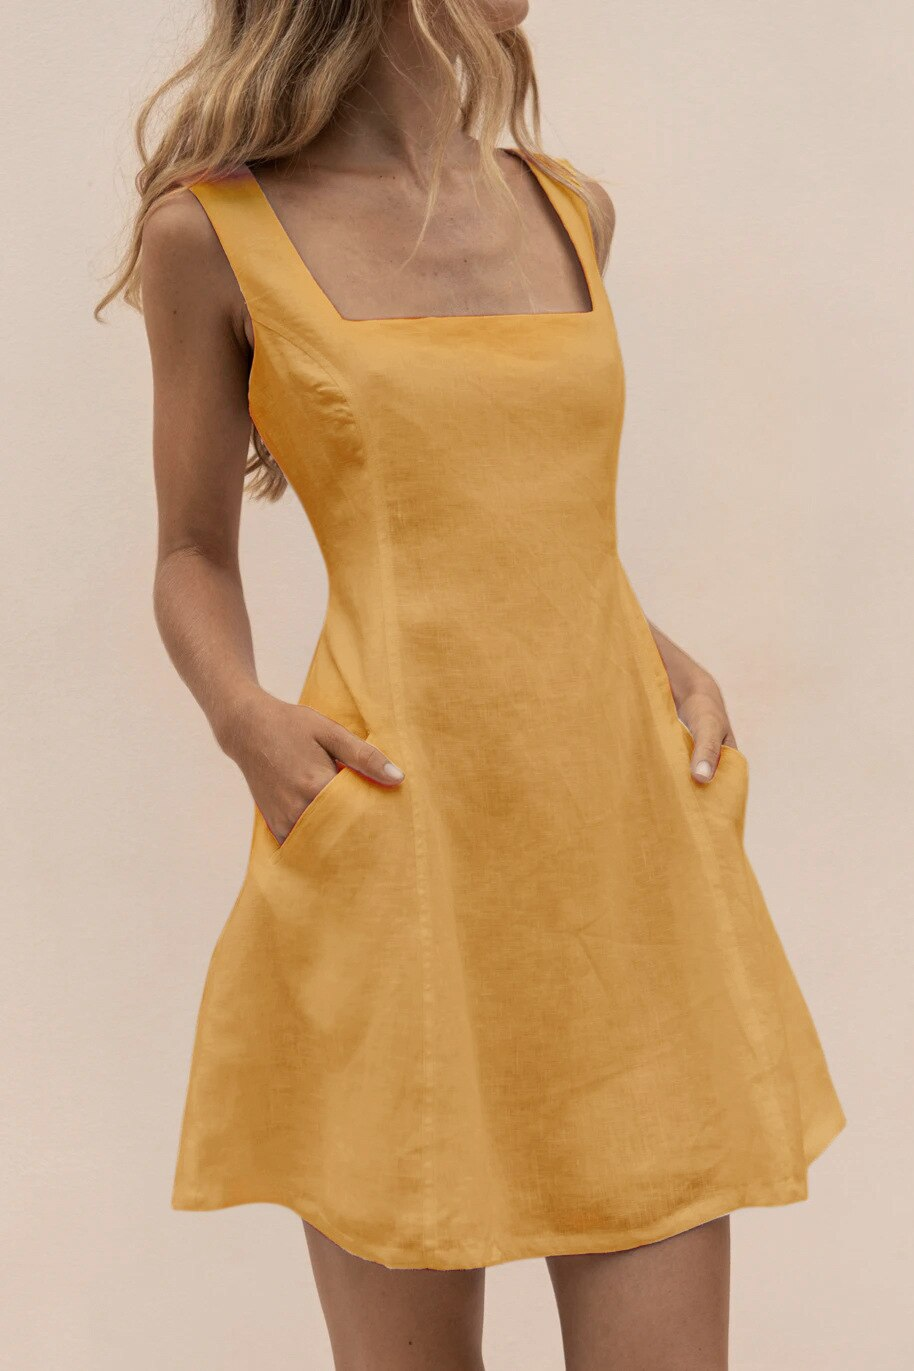 NTG Fad Dress yellow / S Spaghetti Strap Square Neck Casual Belted Pocket Mini Dress